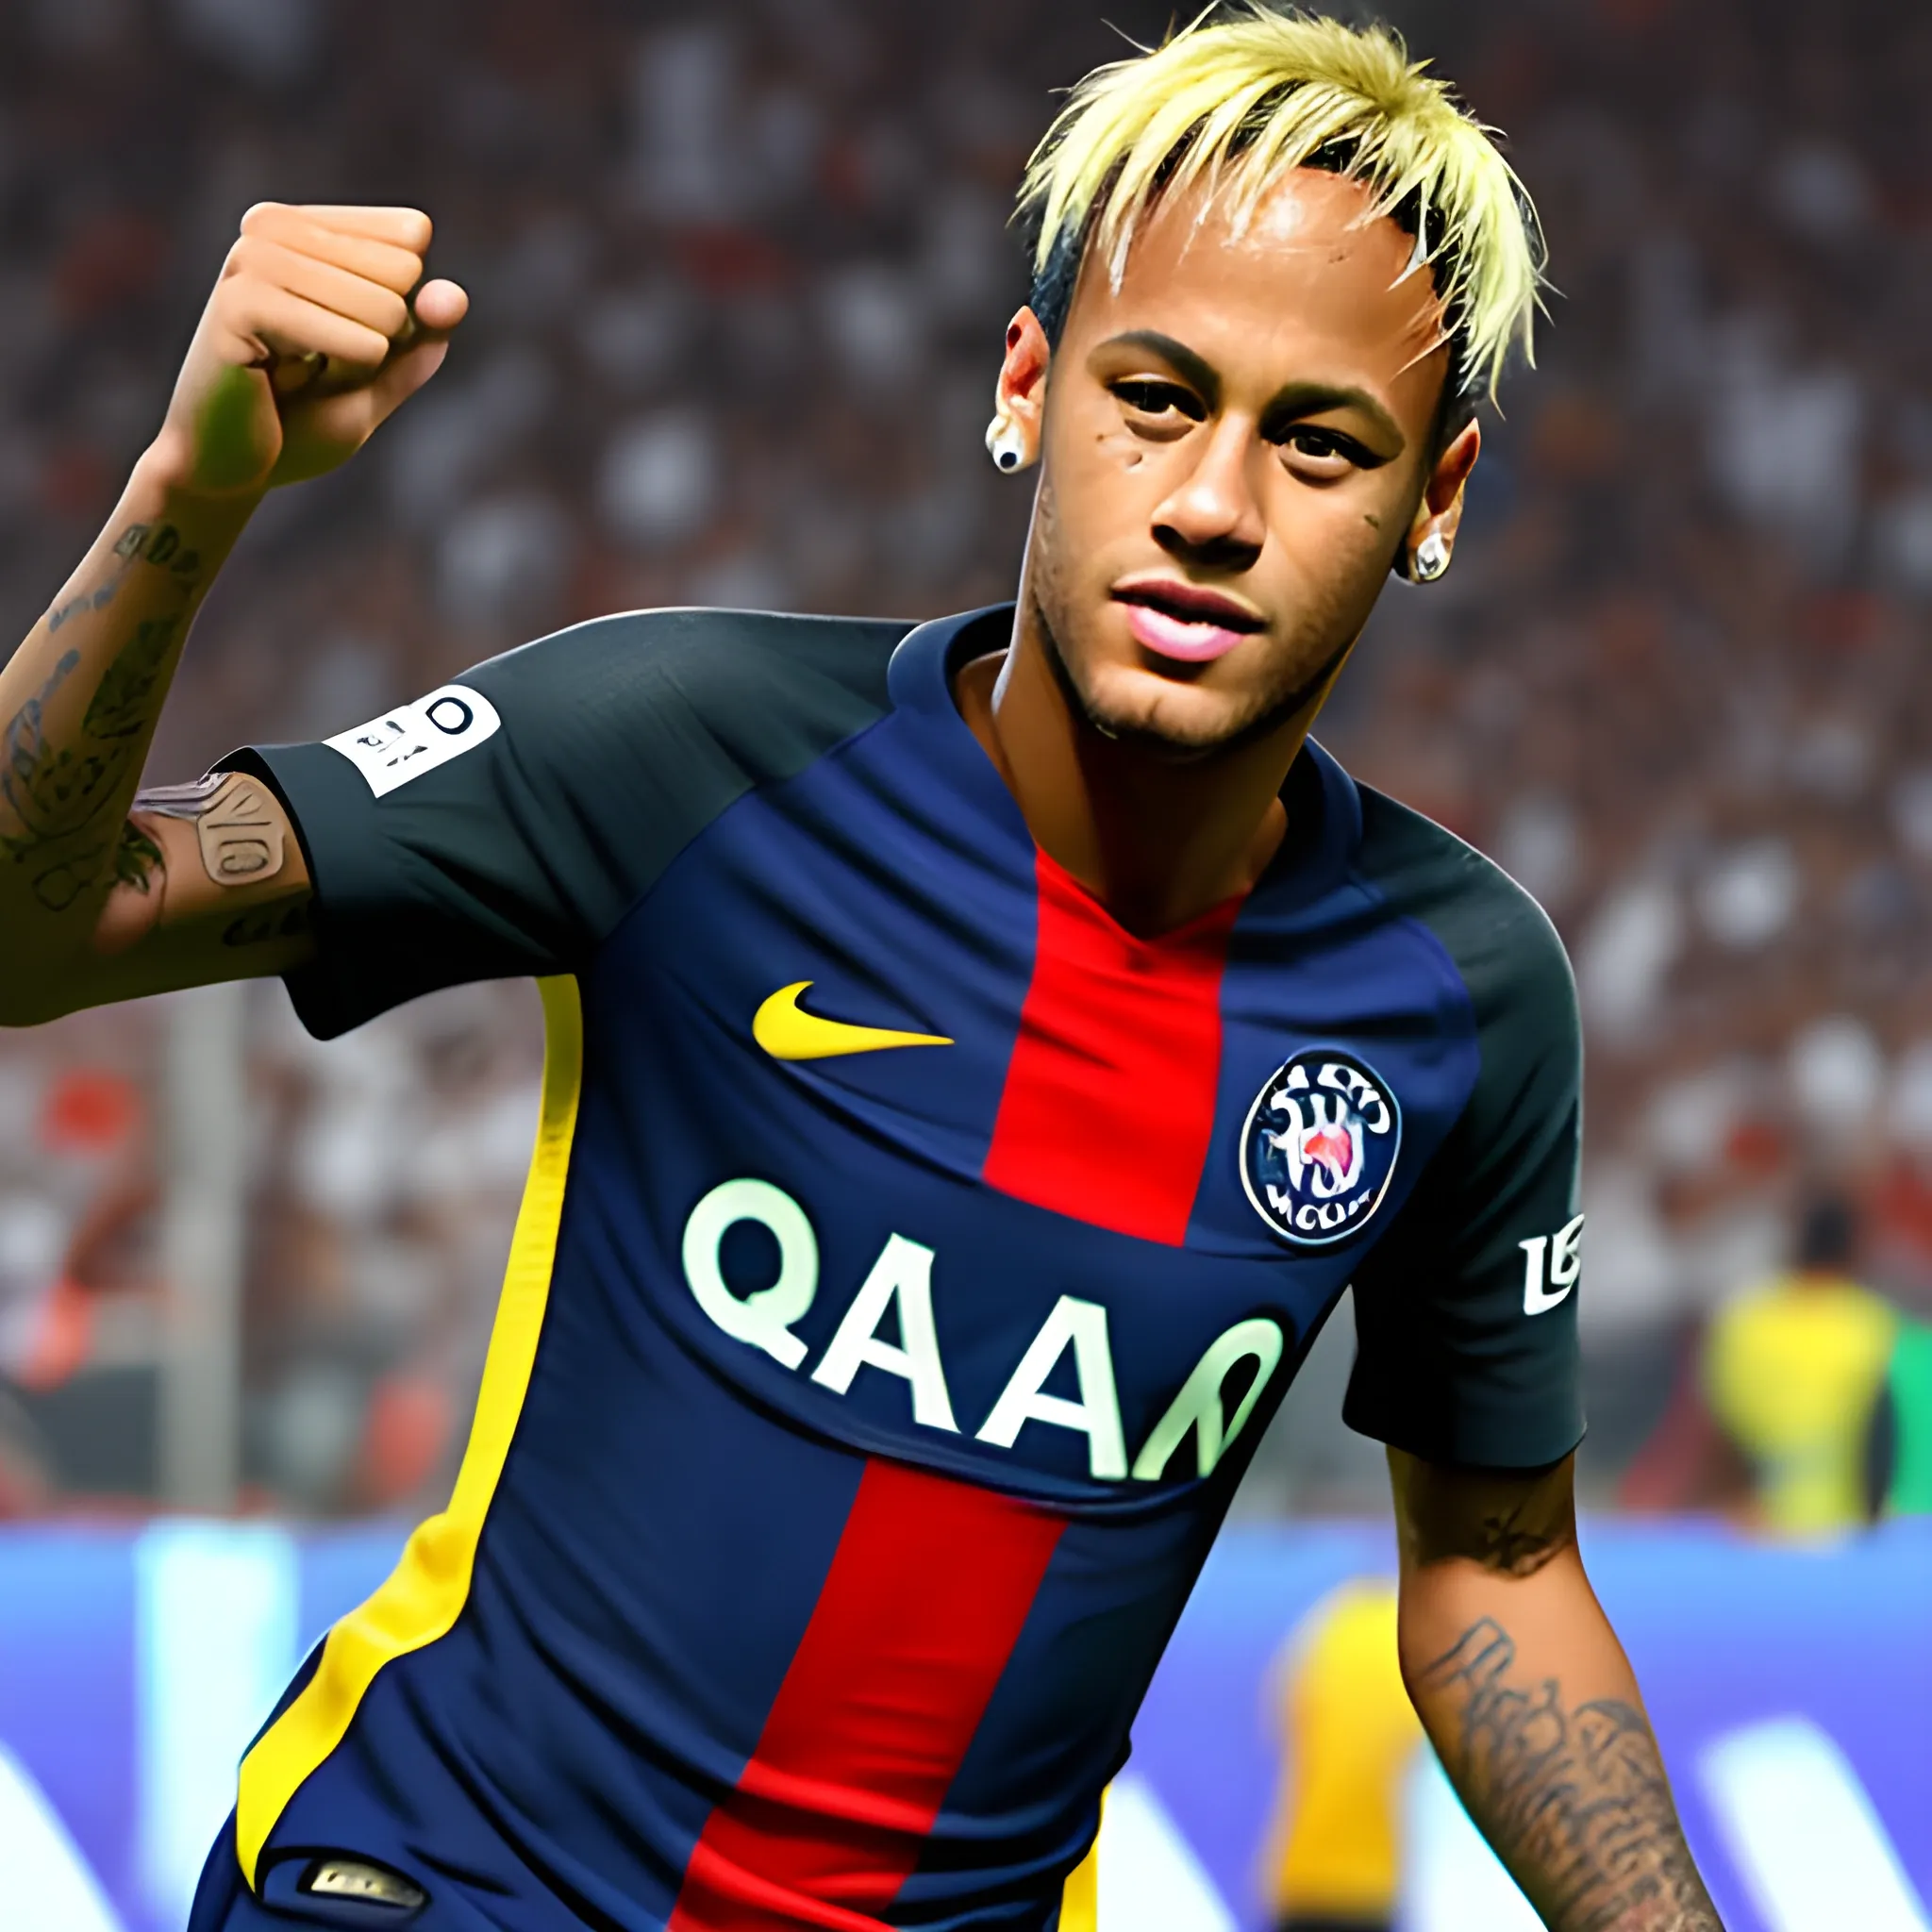 Neymar celebrating a goal wearing a Corinthians football club uniform